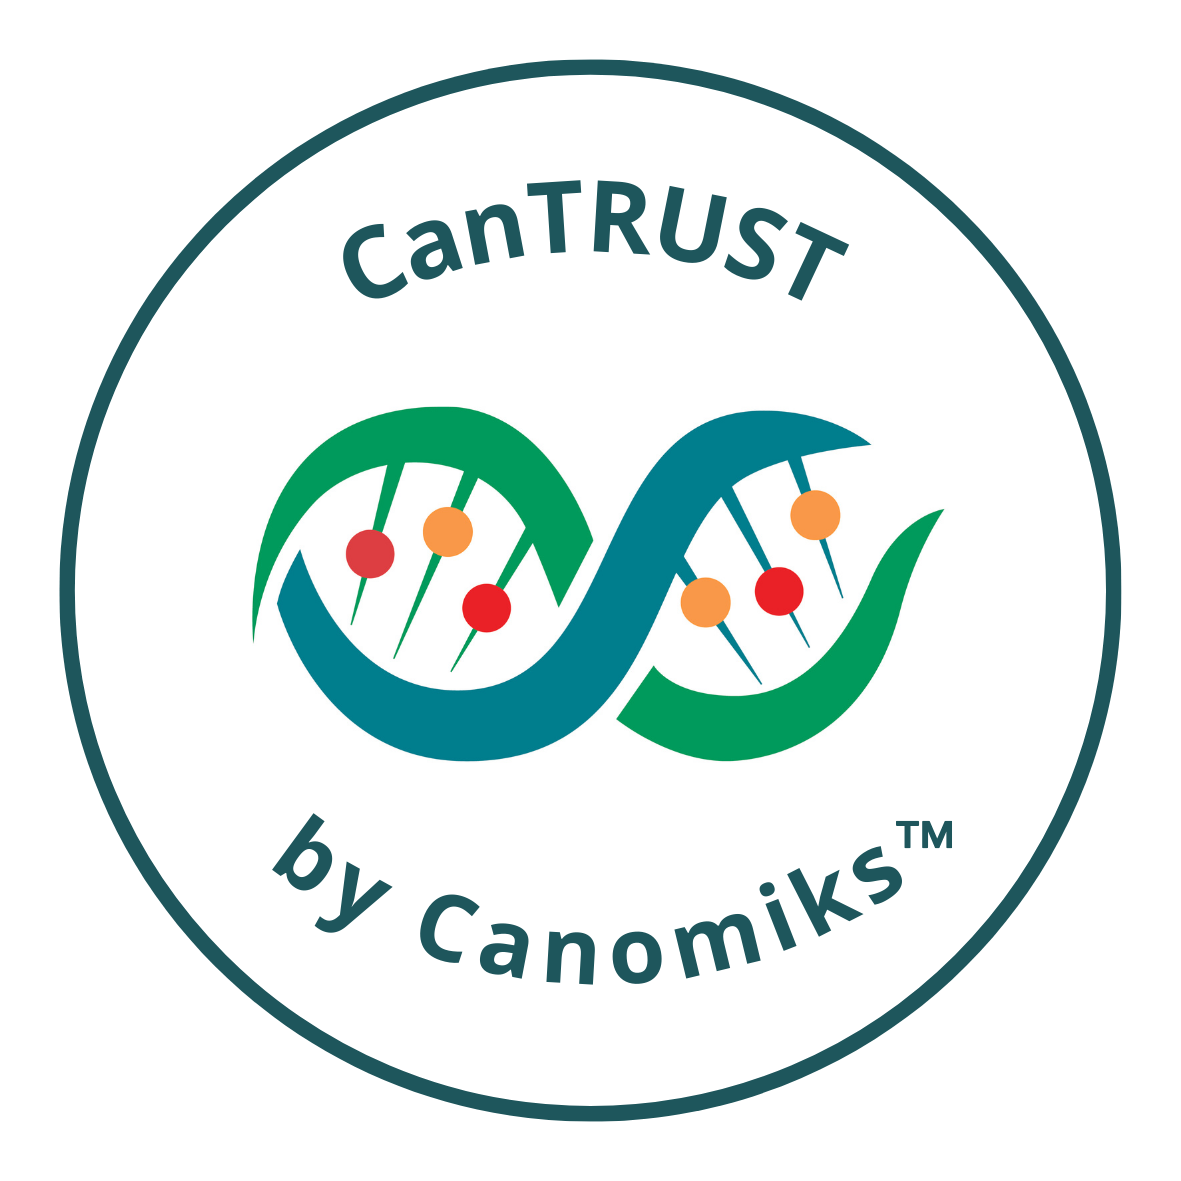 CanTrust Sticker (4) (1).png